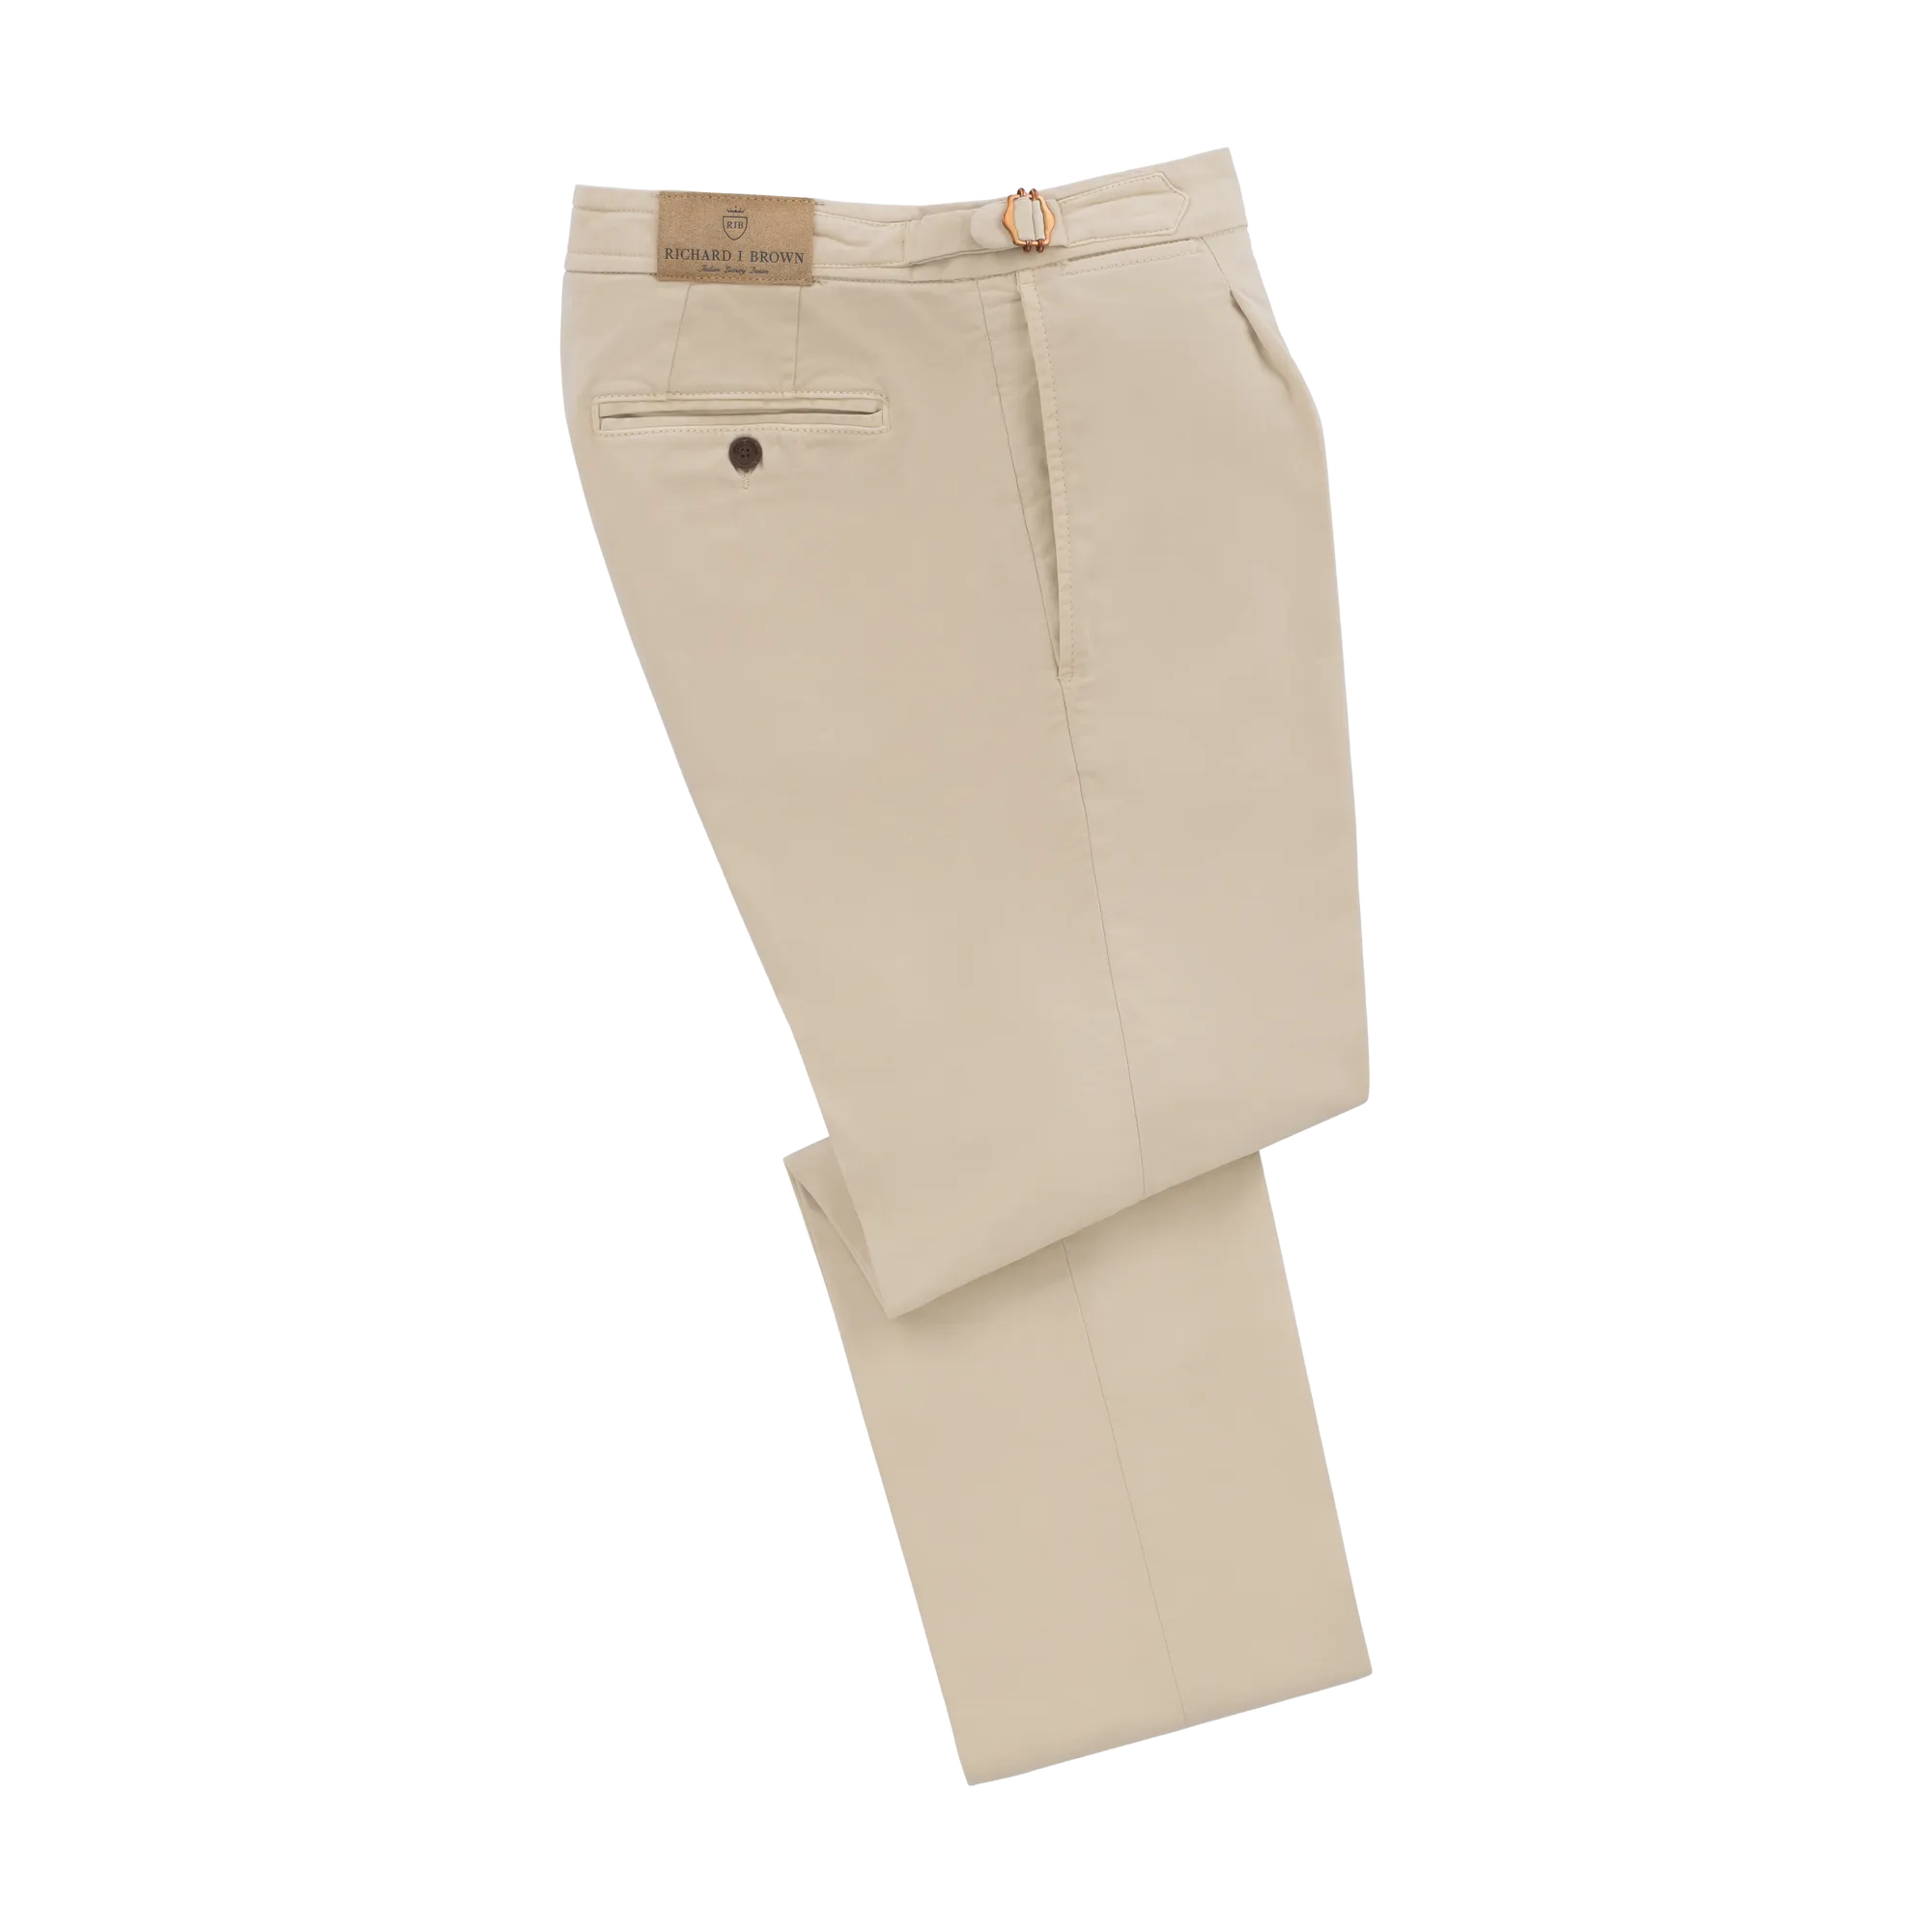 Hidden elastic waistband trousers in beige, made in Covert fabric by  @vitalebarberiscanonico1663 | Instagram